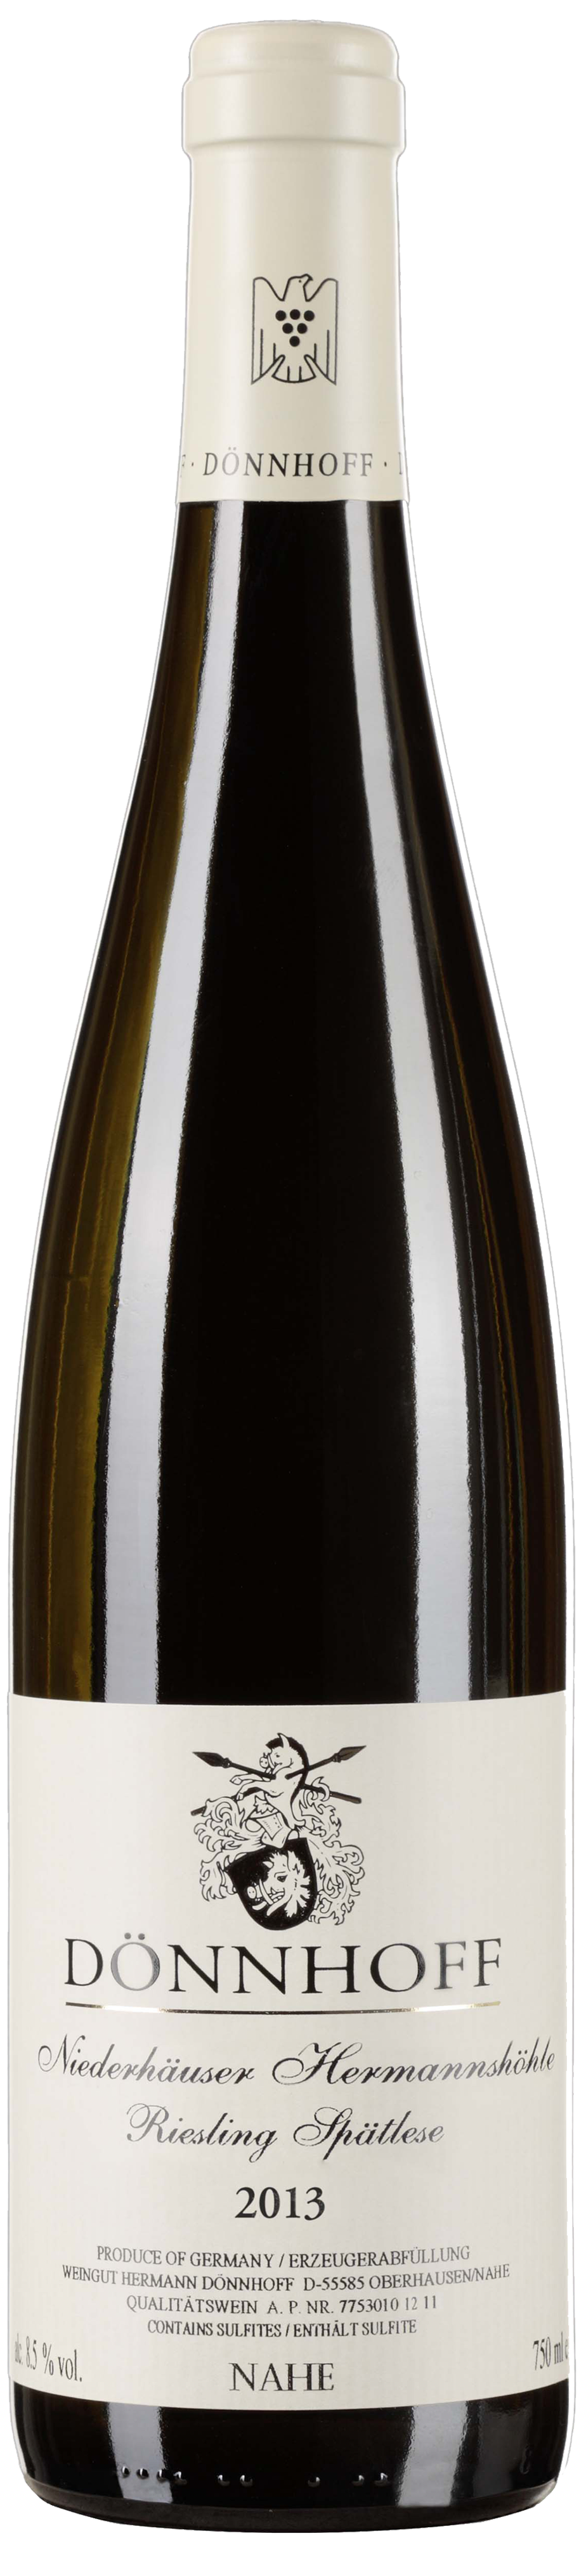 Bottle shot of 2013 Niederhauser Hermannshöhle Spätlese